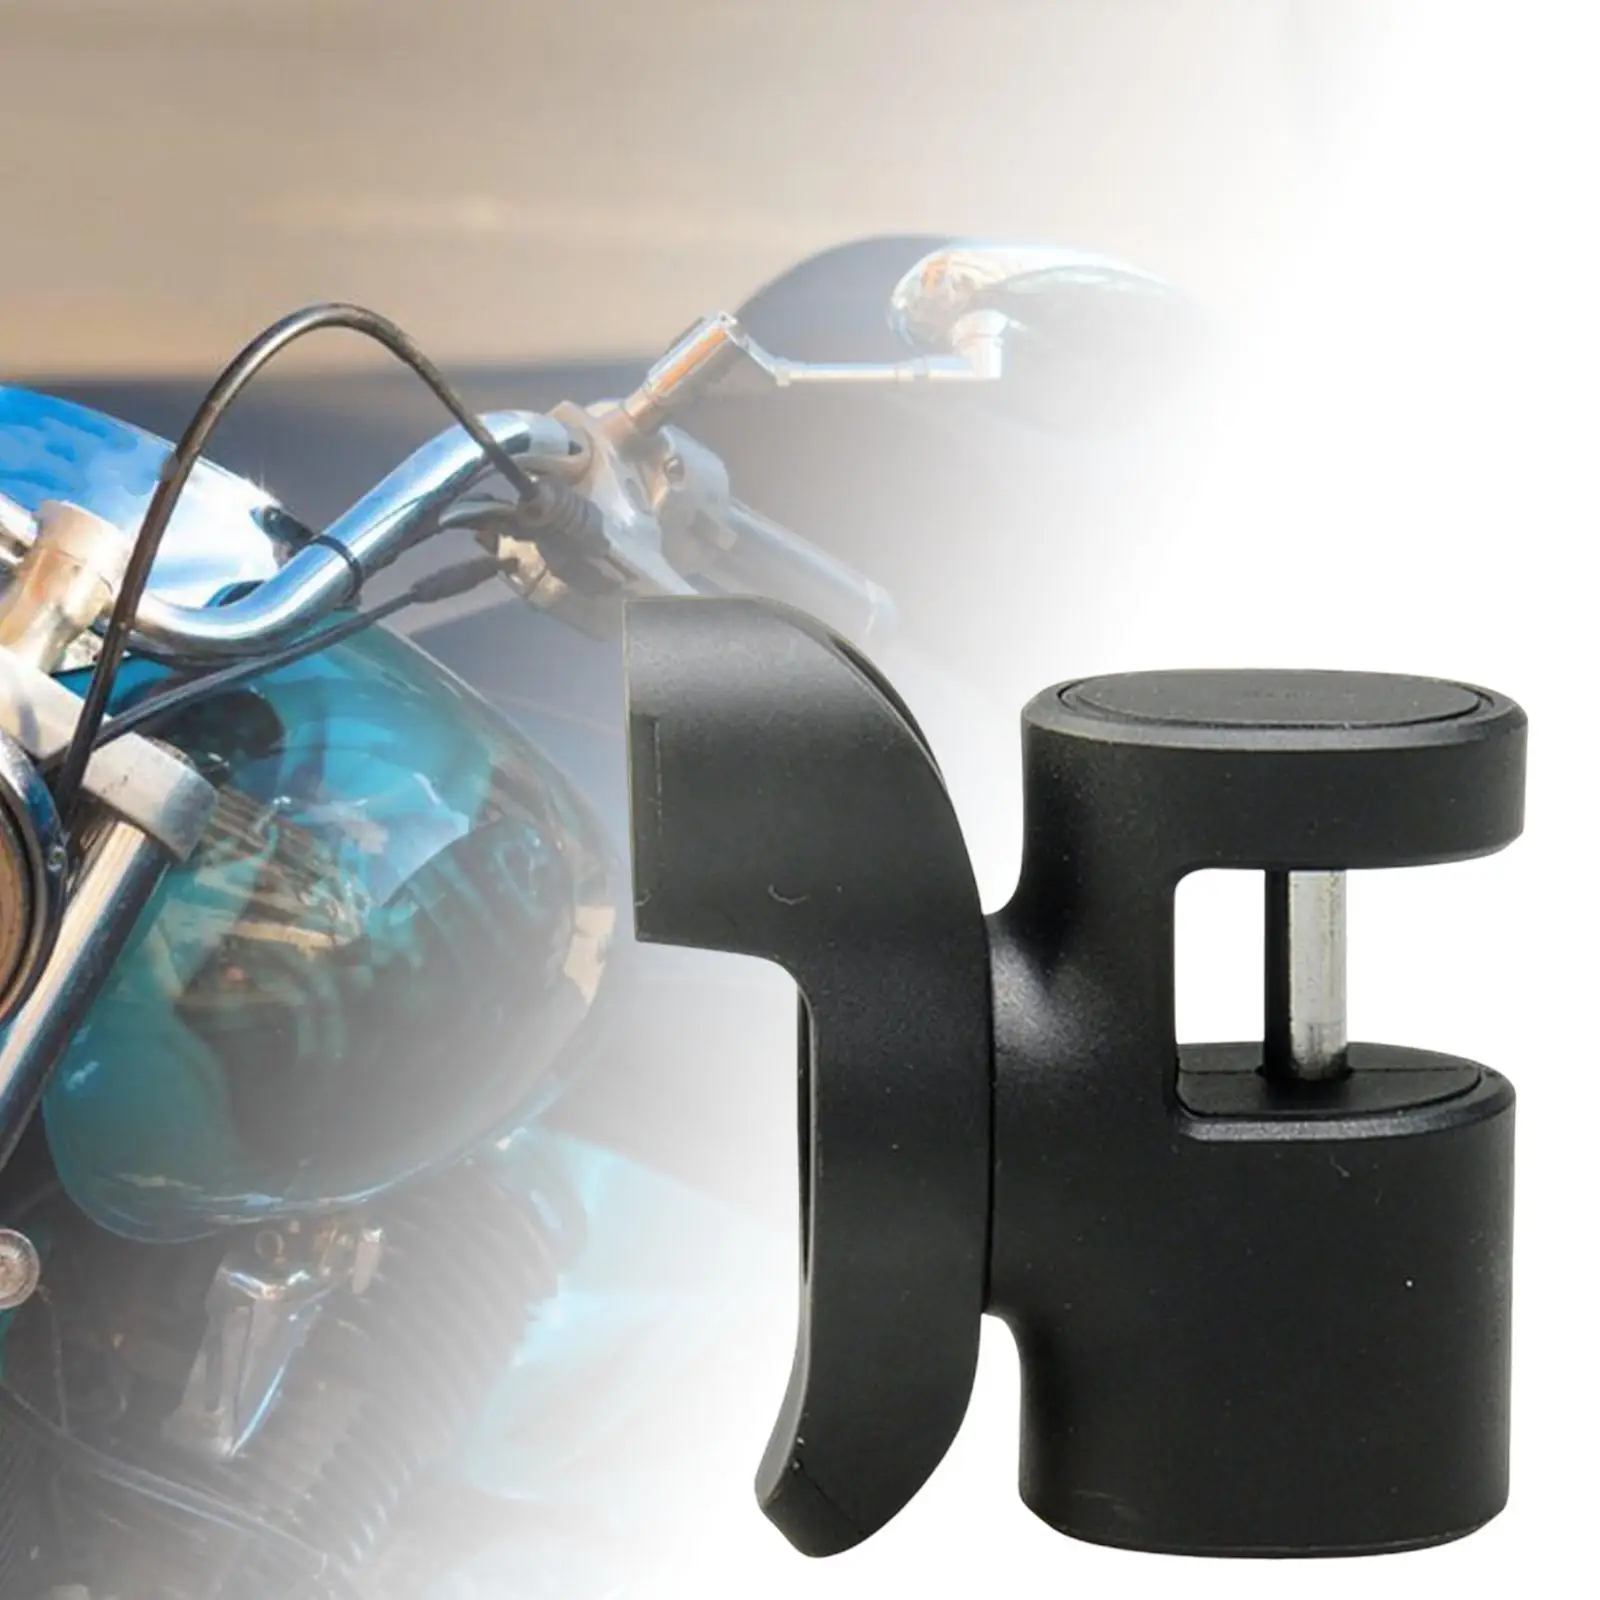 Lock with  Padlock Durable for Motorbike Electric Bike